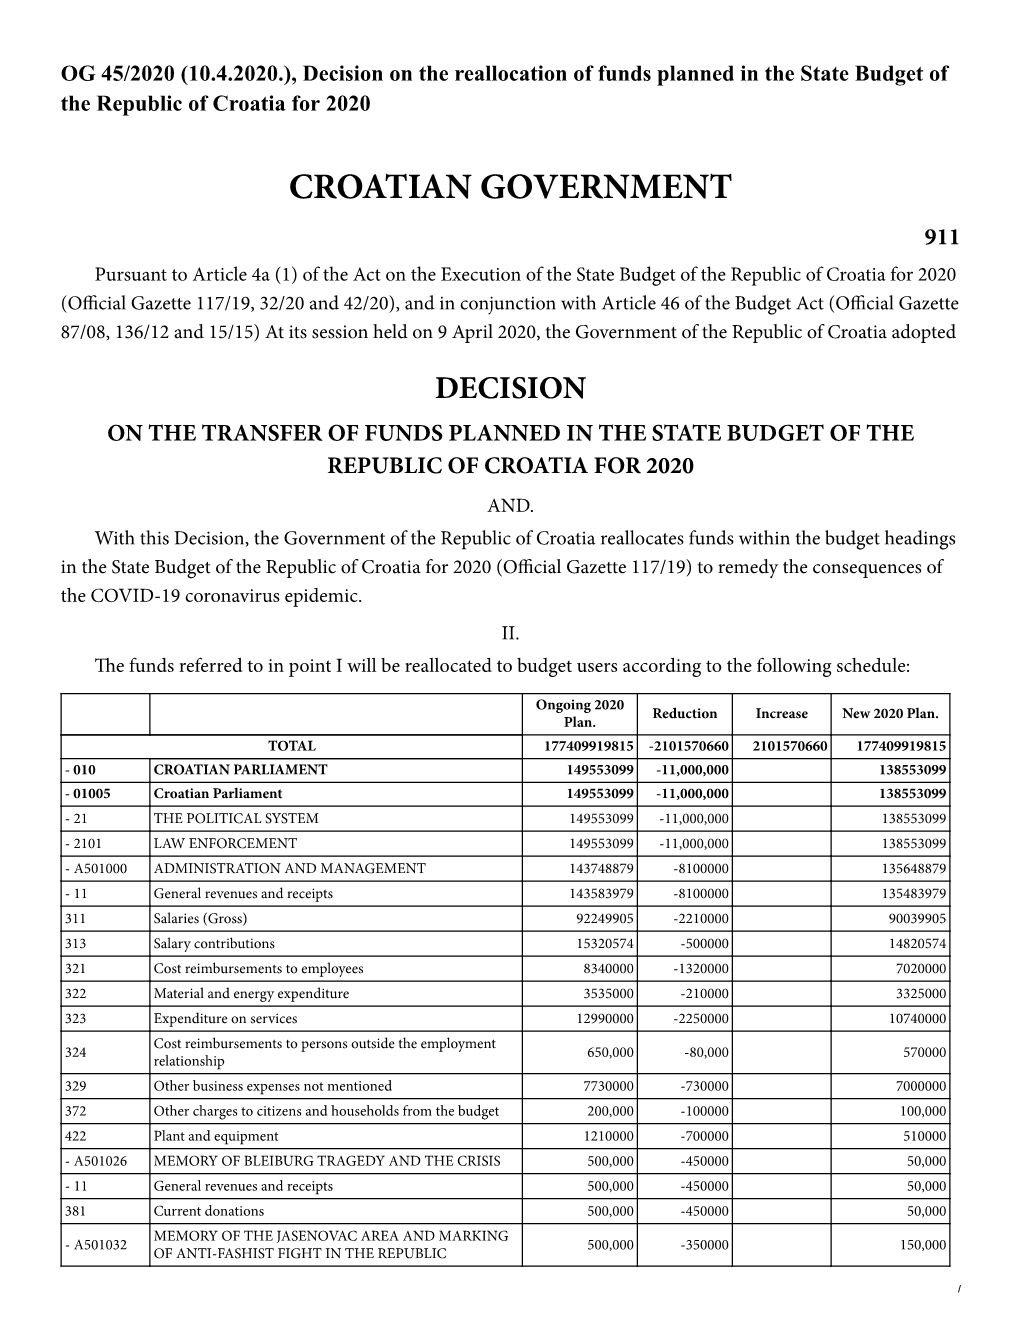 Croatian Government